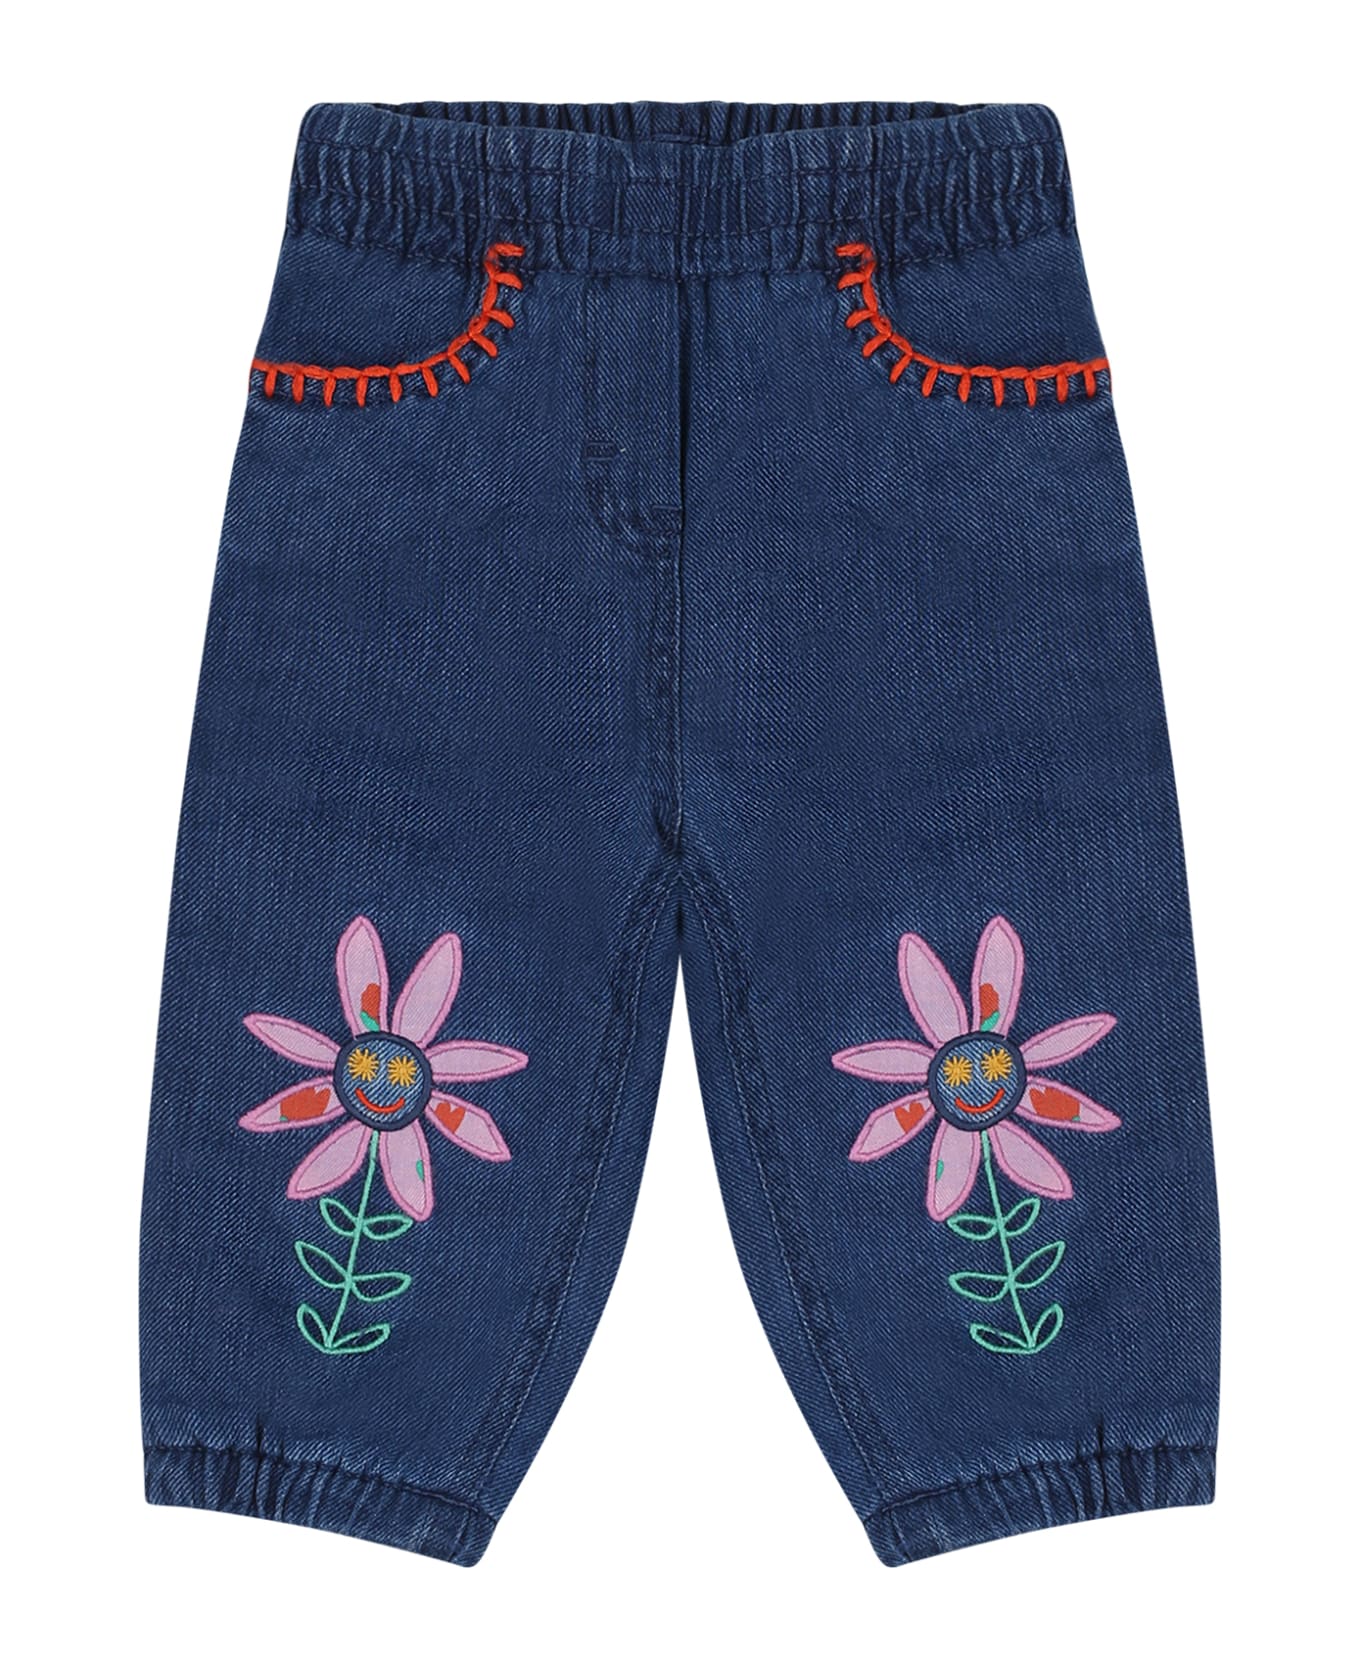 Stella McCartney Kids Blue Jeans For Baby Girl With Flowers - Denim